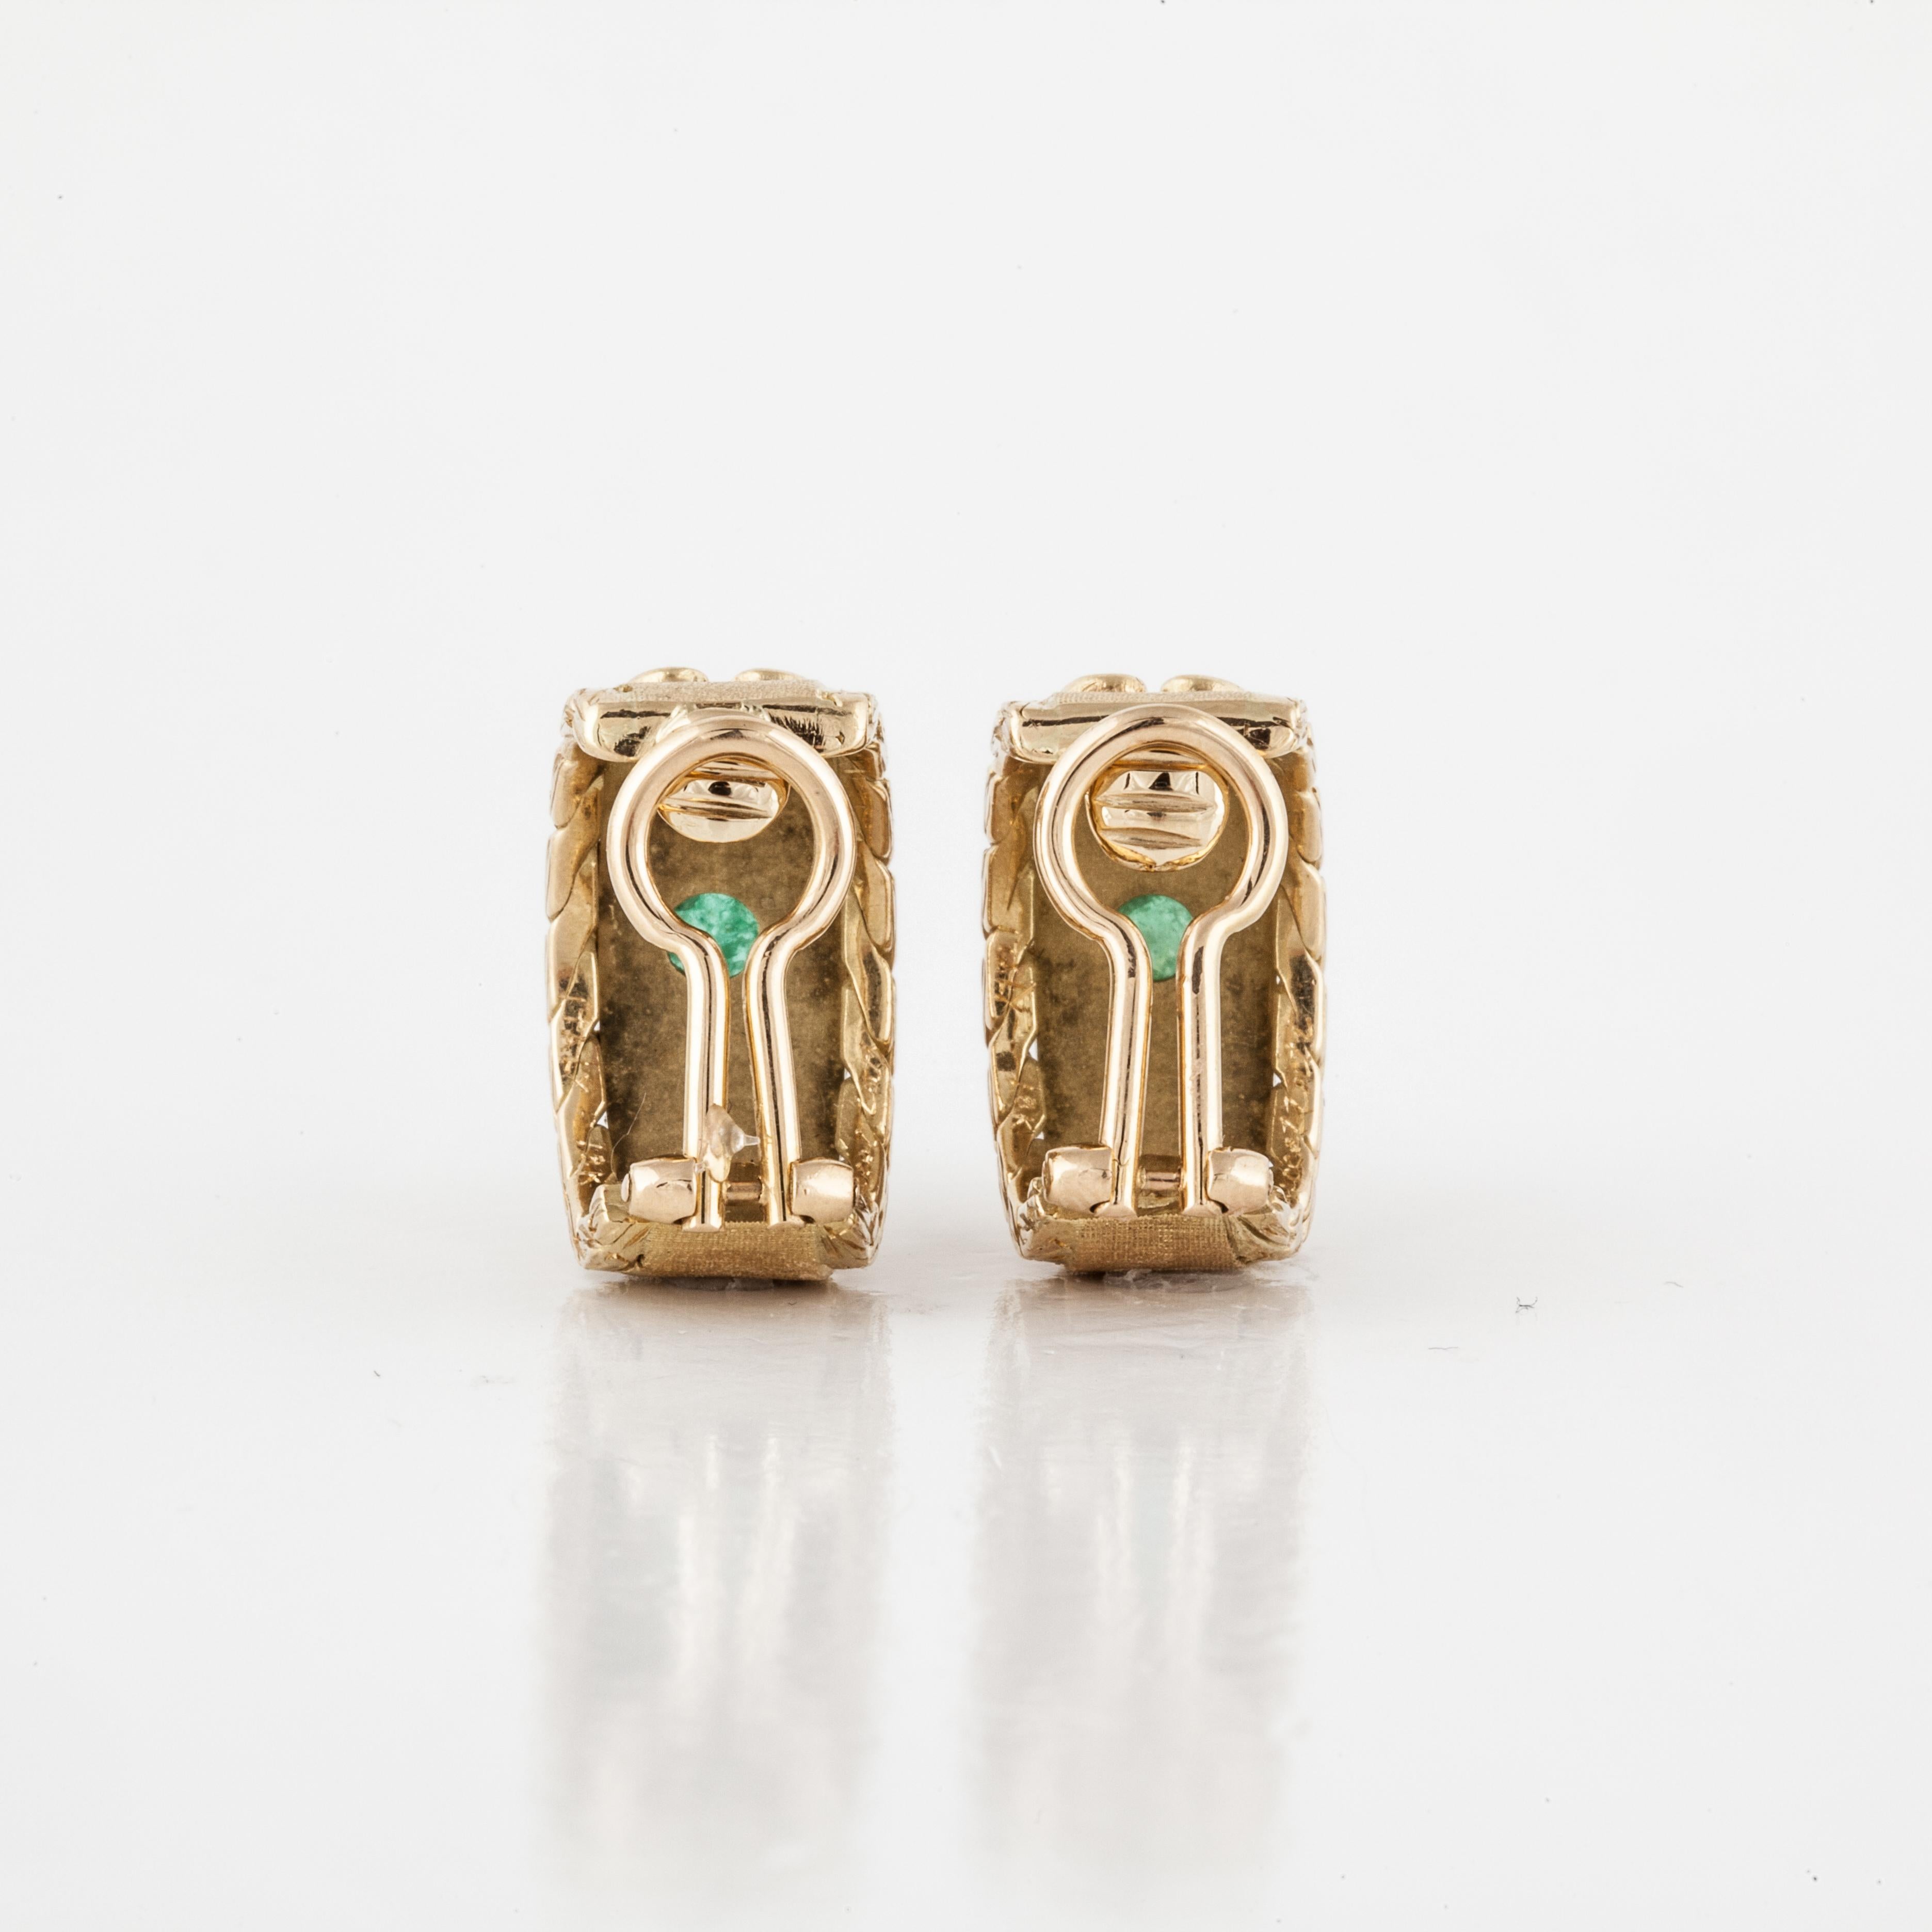 Cabochon Buccellati Emerald Earrings in 18K Gold